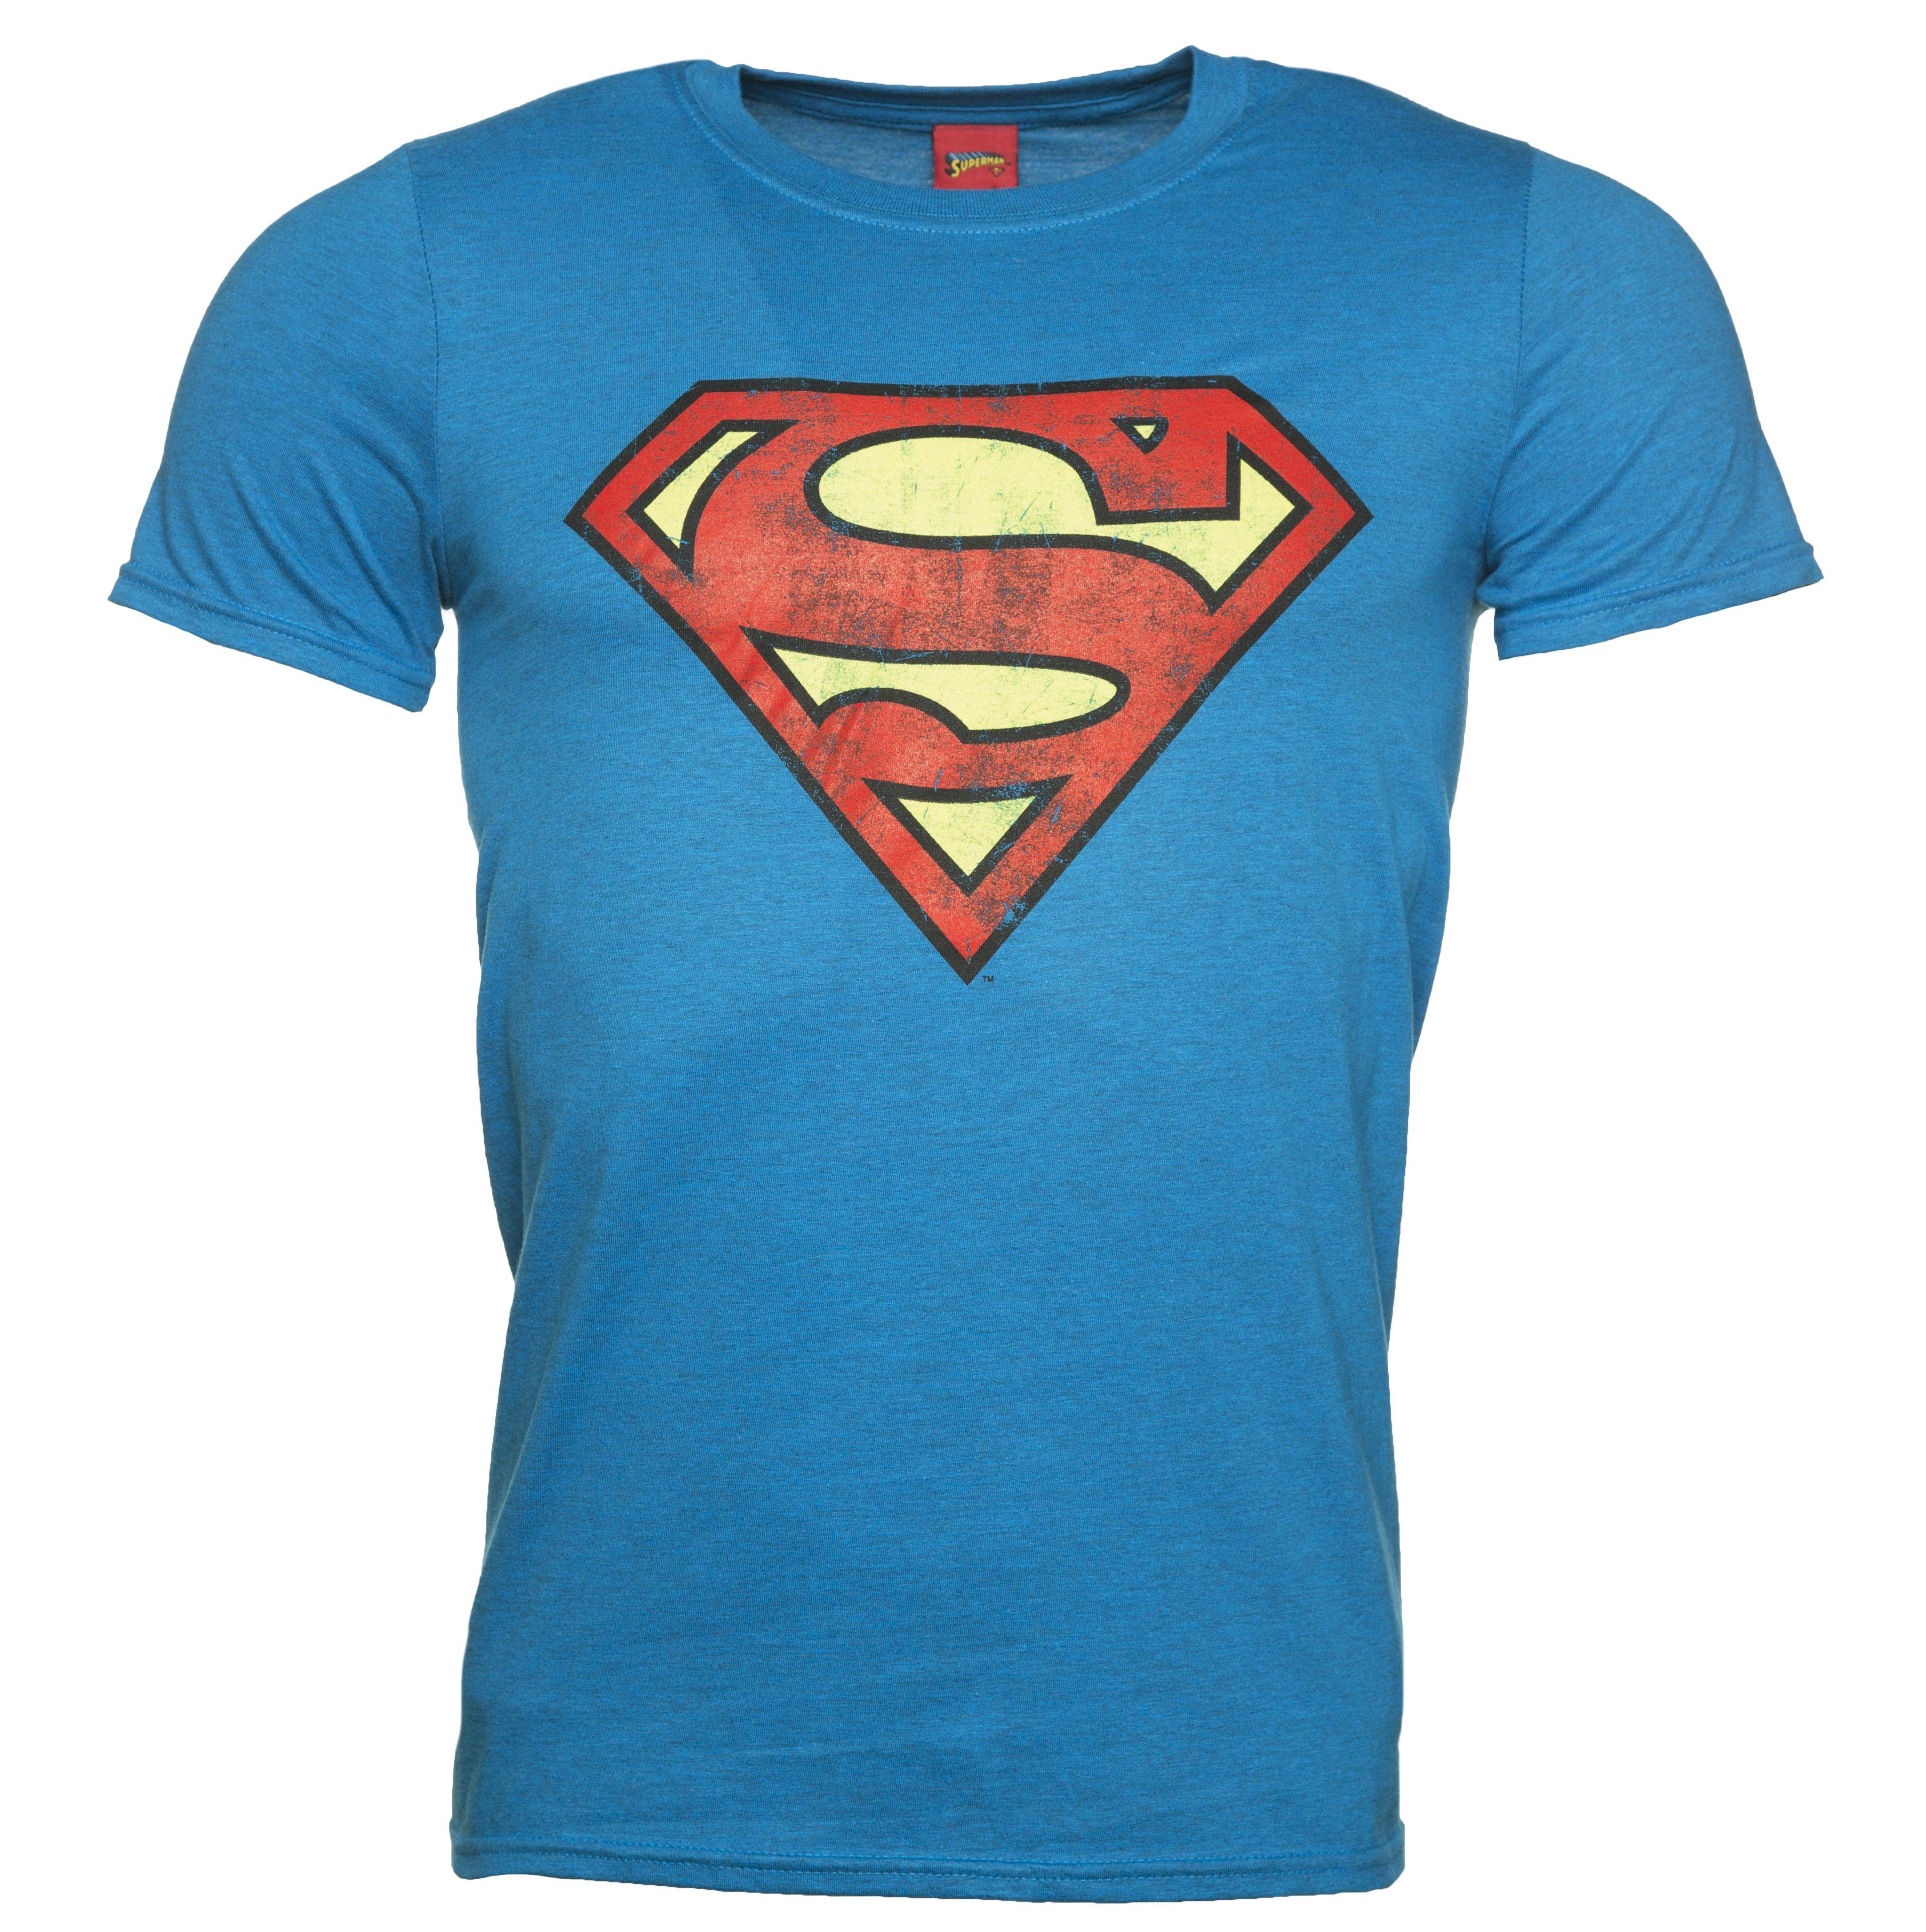 Distressed Superman Logo - Men's Bright Blue Distressed Superman Logo T Shirt